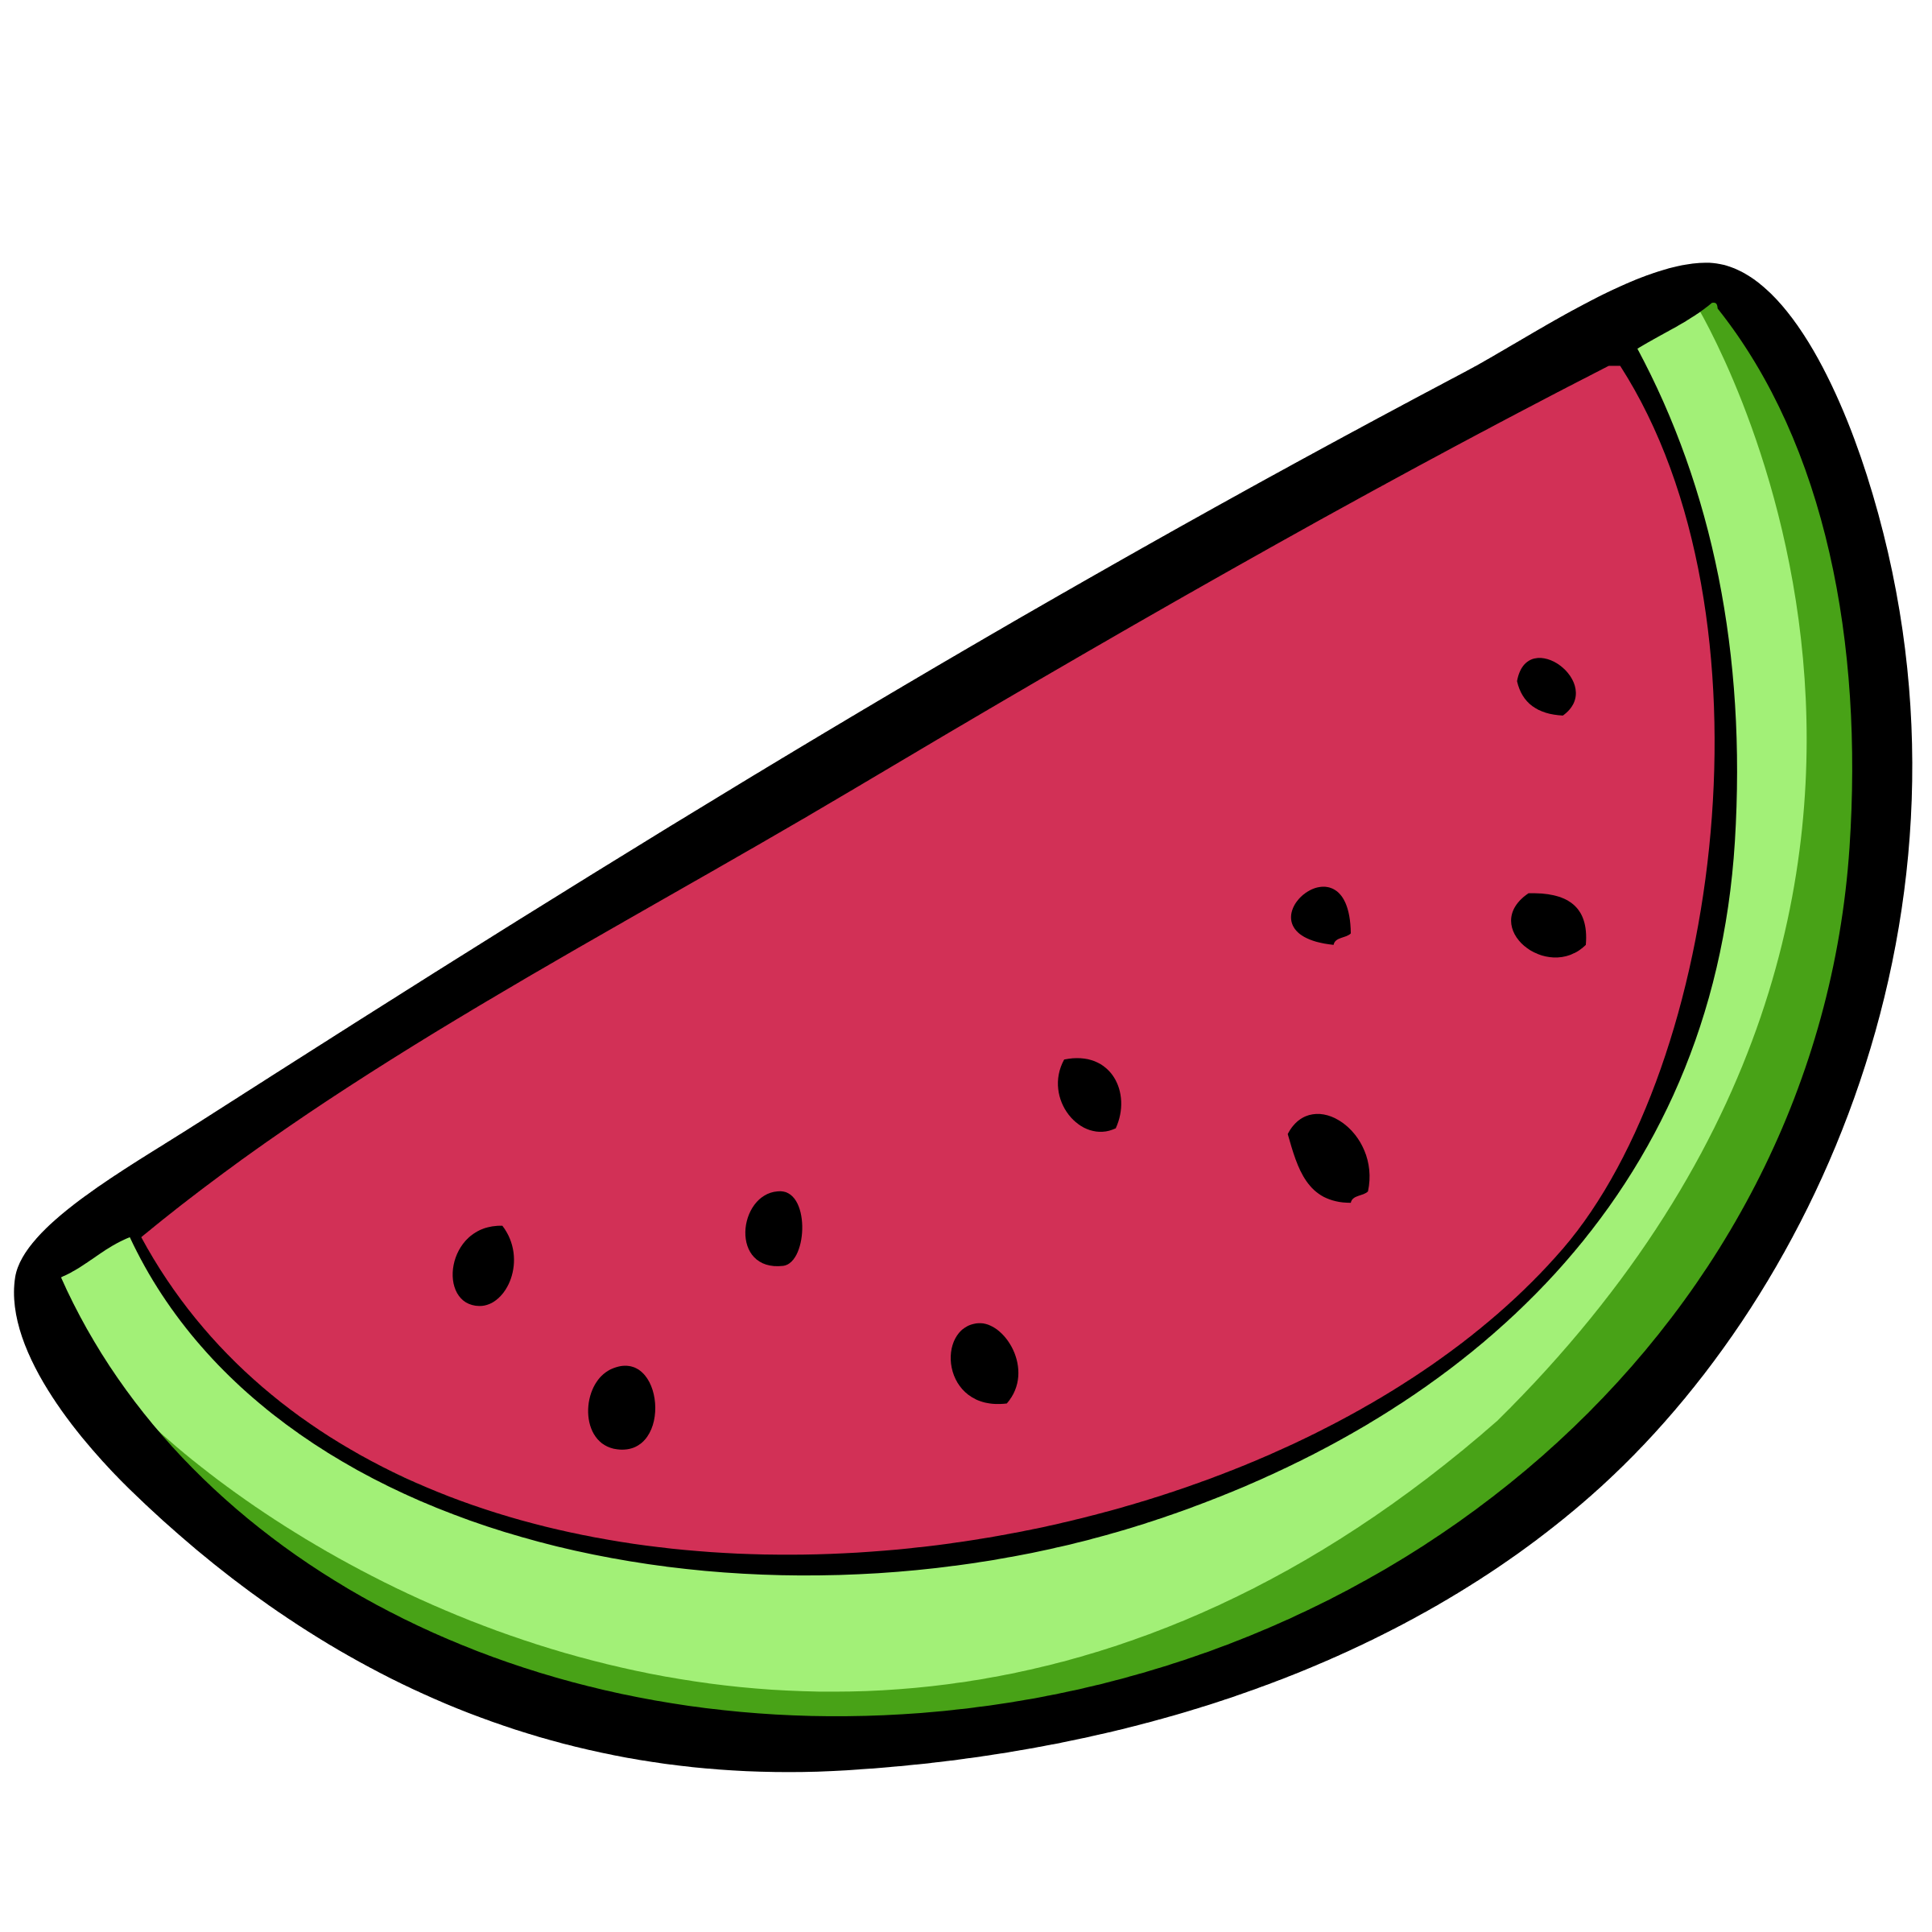 Watermelon Clip Art - Watermelon Clip Art